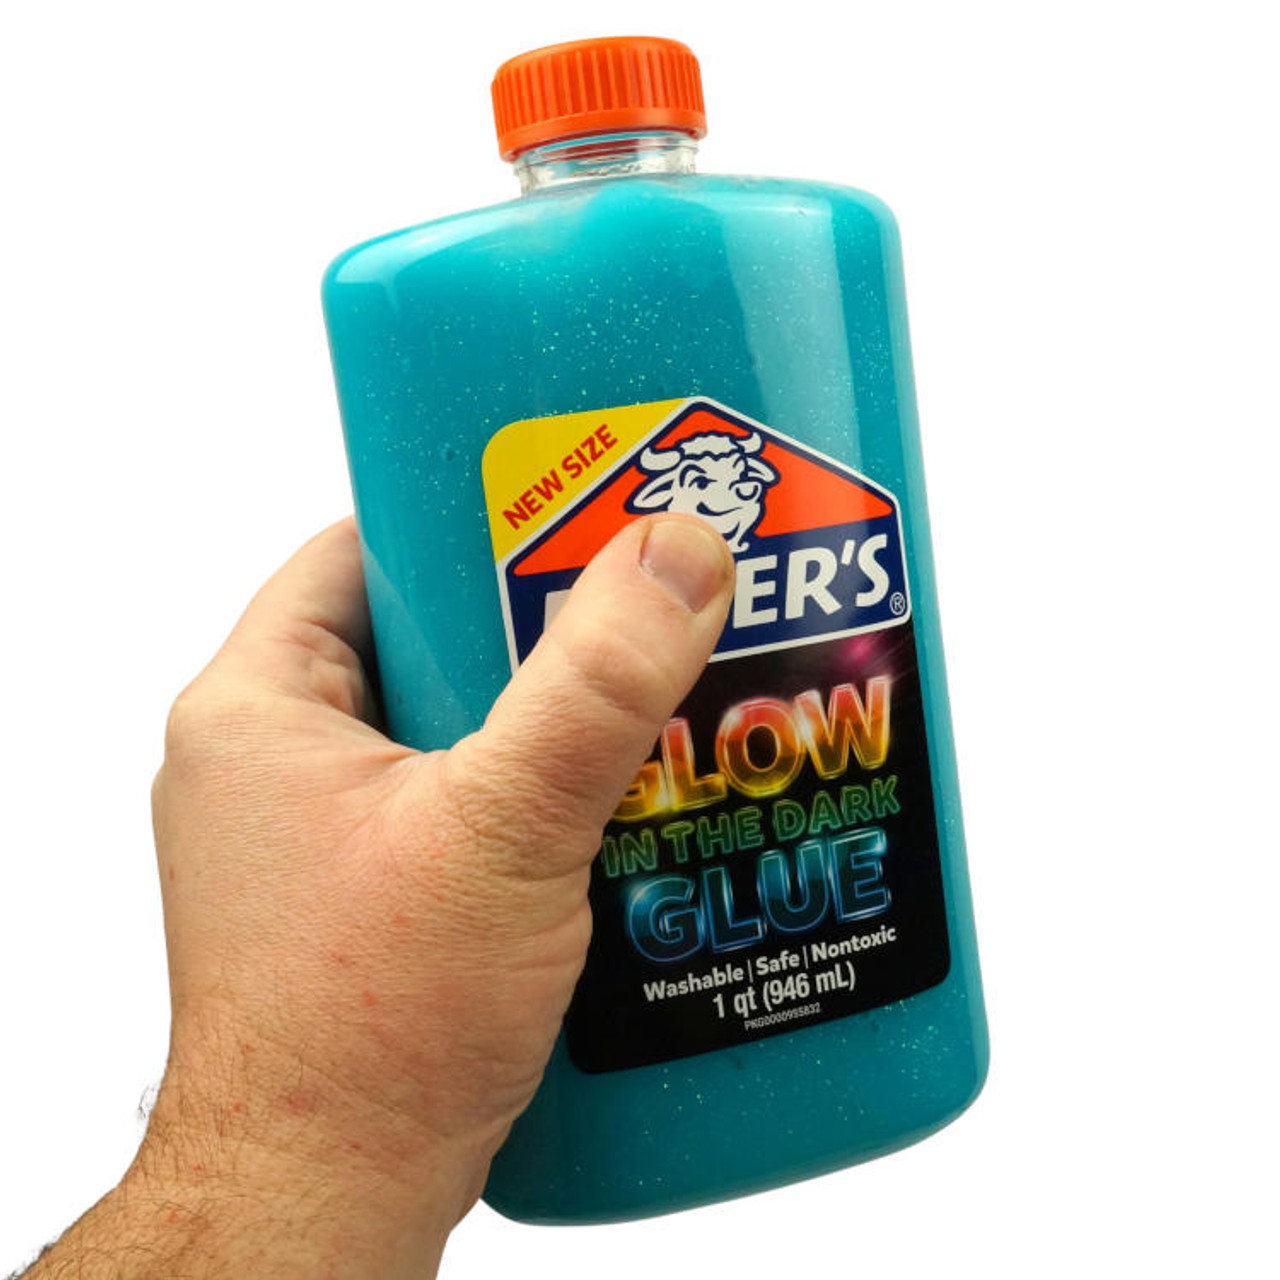 Elmer's Glow-in-the-Dark Slime Kit, Glow-in-the-Dark Glue